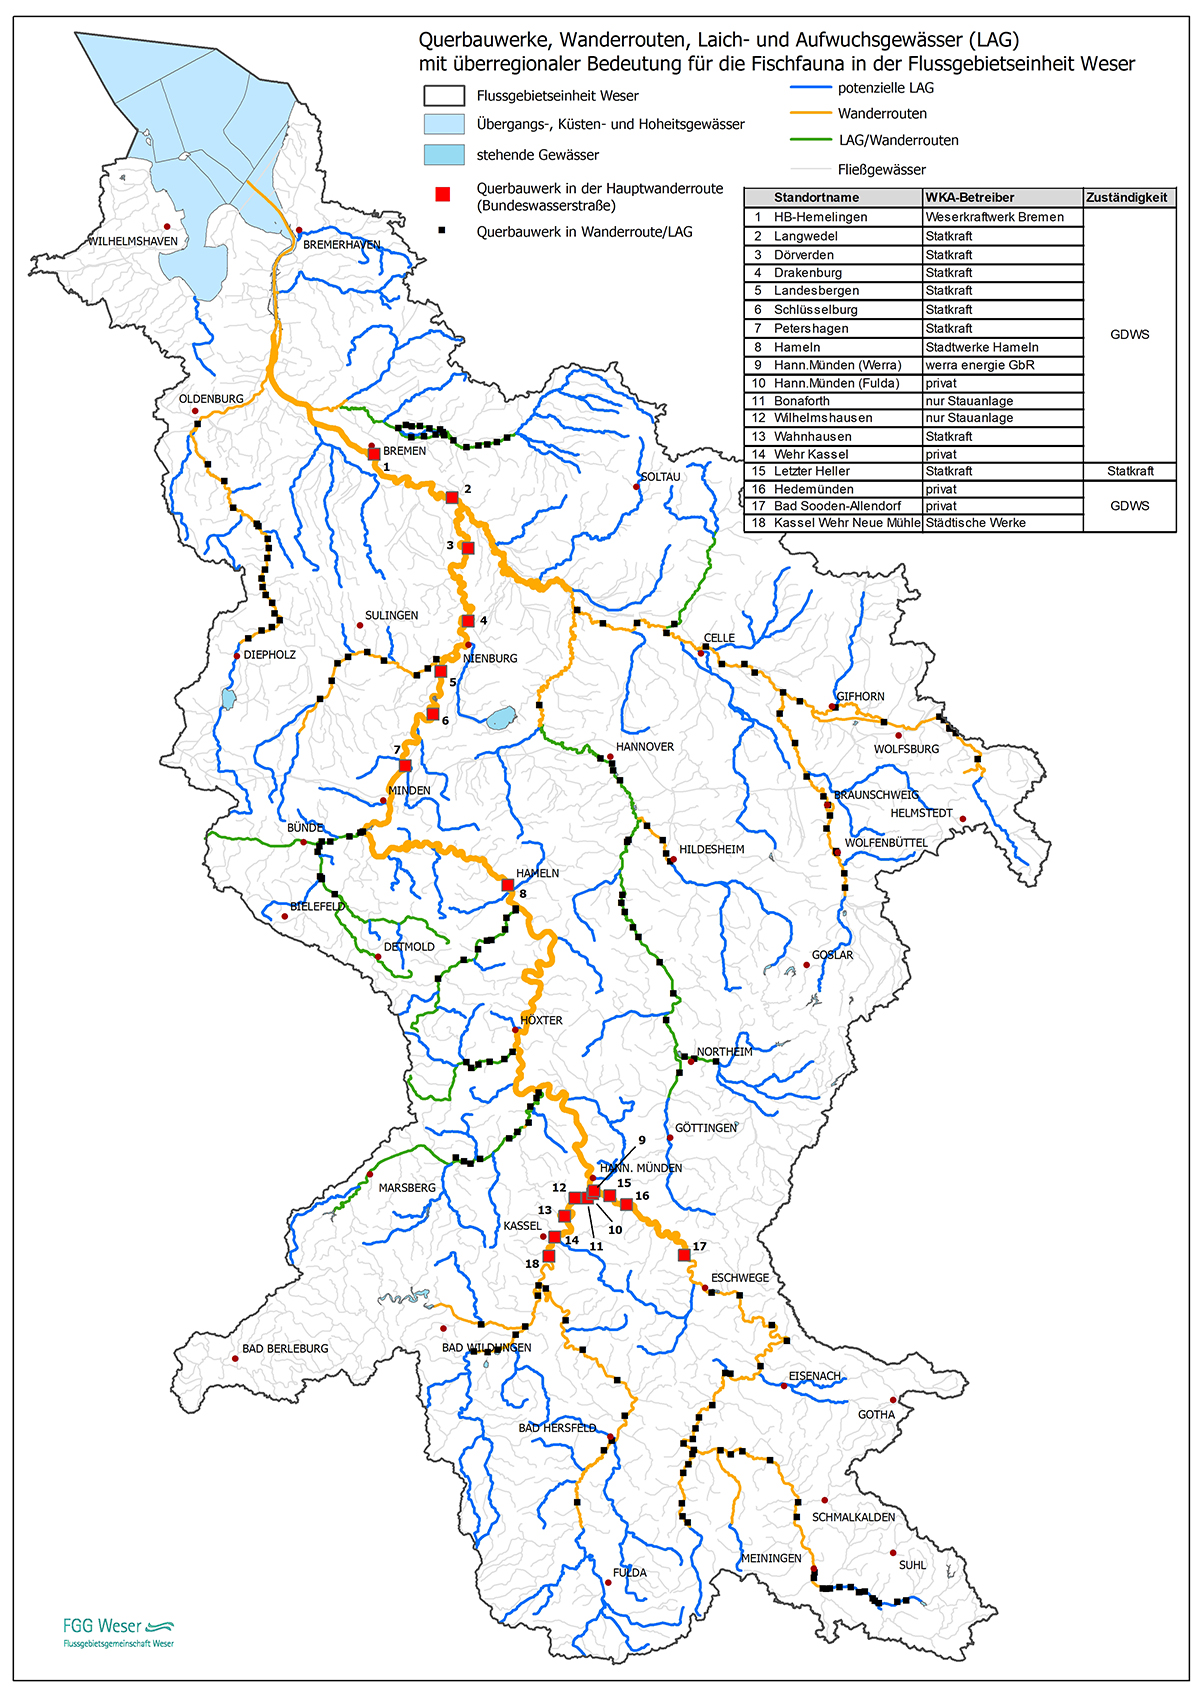 Wanderrouten und zentrale Querbauwerksstandorte (FGG Weser, 2021)